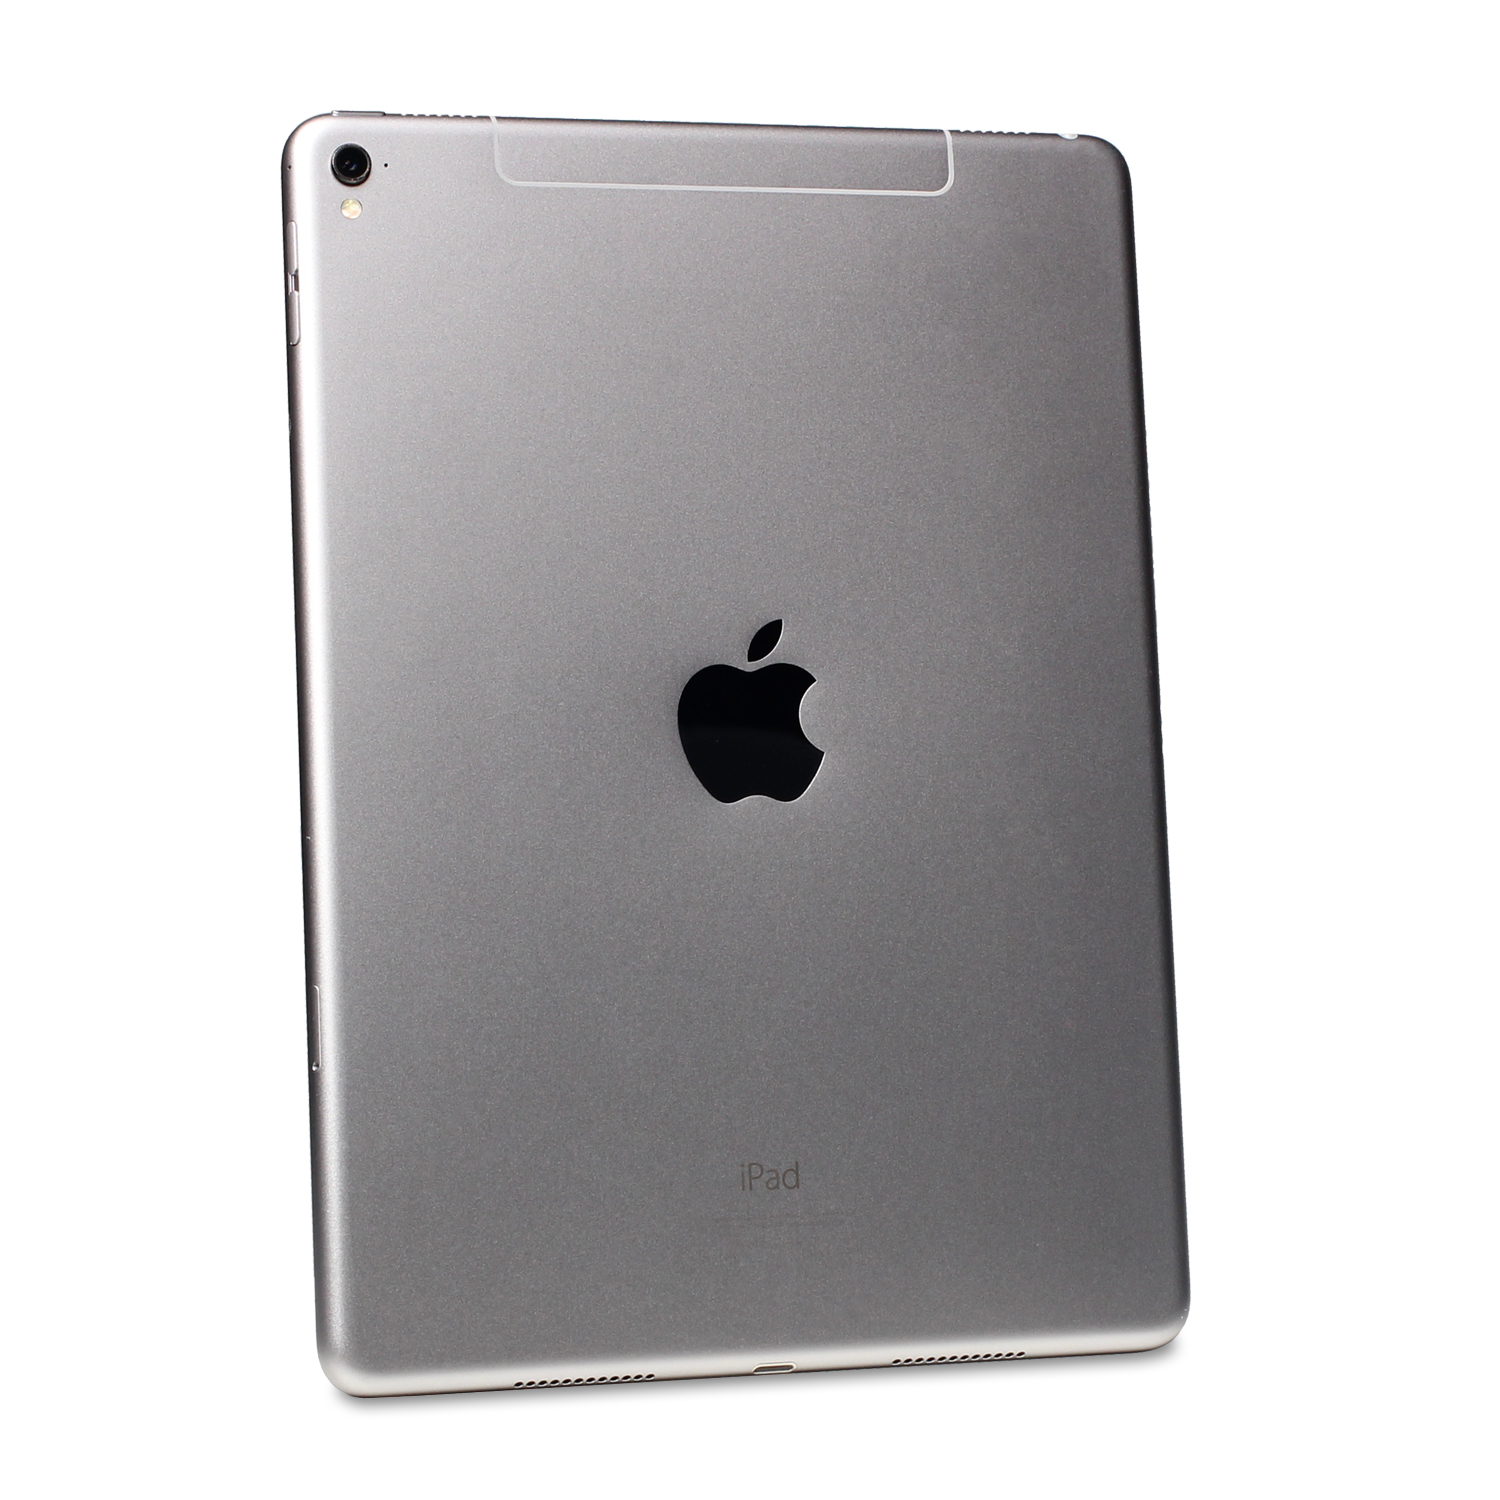 Apple, Inc. iPad 9.7-inch 5th Gen 2017 Wi-Fi 32GB Space Gray A1822